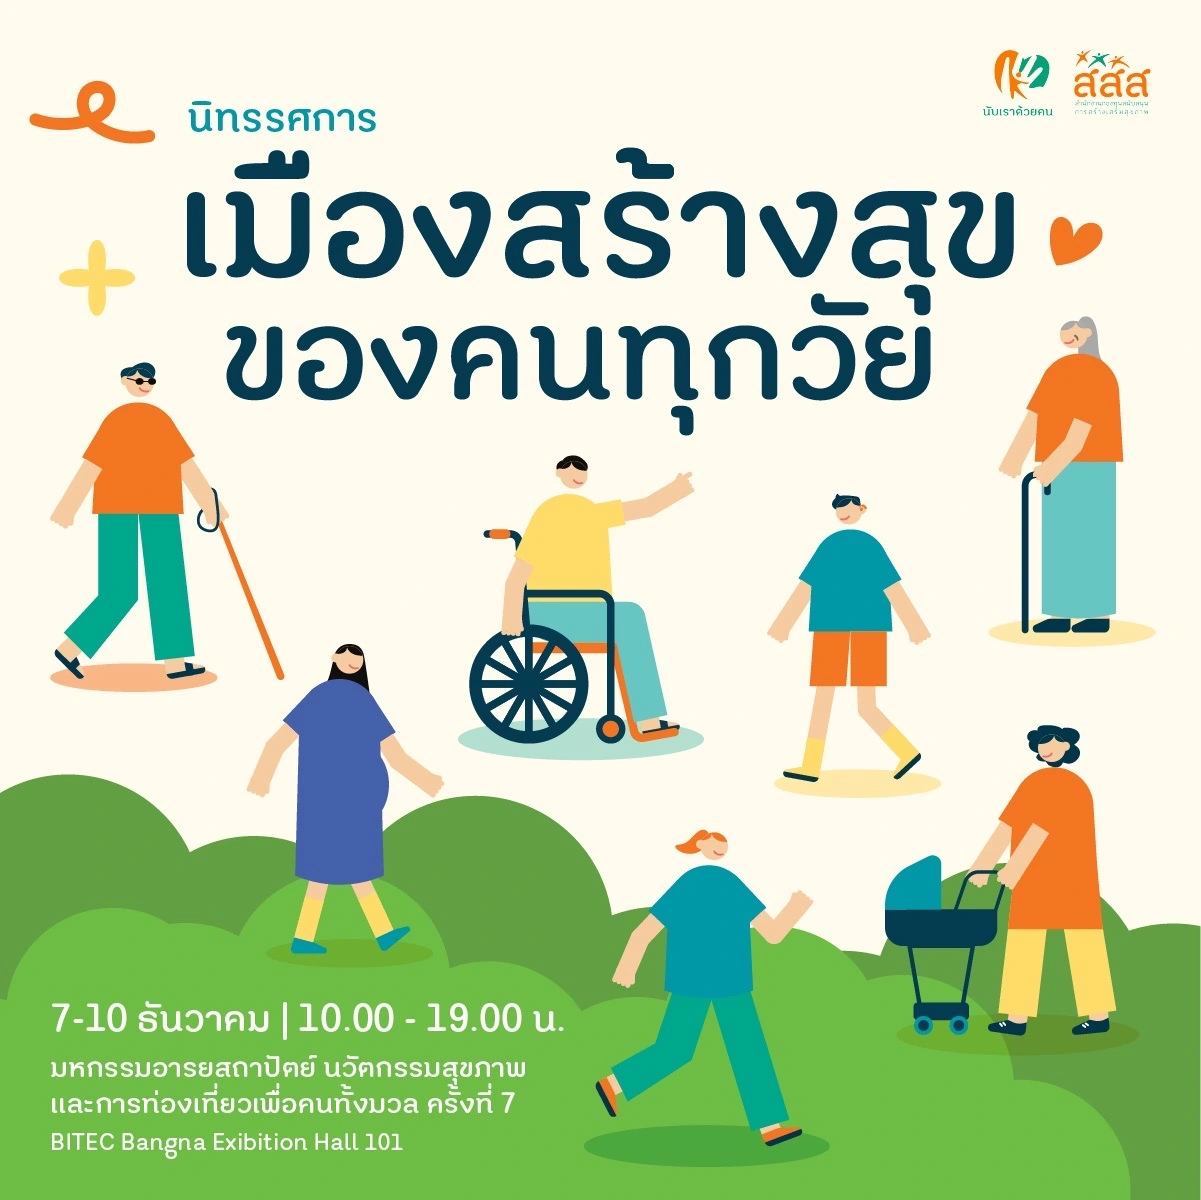 ขอเชิญทุกท่านชมนิทรรศการ “เมืองสร้างสุข ของคนทุกวัย” ในงาน Thailand Friendly Design Expo 2023 : มหกรรมอารยสถาปัตย์ นวัตกรรมสุขภาพ โรงแรมและการท่องเที่ยวเพื่อคนทั้งมวล ครั้งที่ 7 . ระหว่างวันที่ 7-10 ธันวาคม 2566 ณ ฮอลล์ 101 ศูนย์นิทรรศการและการประชุมไบเทค บางนา กทม. . นิทรรศการ ‘เมืองสร้างสุข ของคนทกวัย’ เมืองที่ออกเเบบด้วยเเนวคิดการออกเเบบเพื่อทุกคน (Universal Design) ไม่ว่าจะคุณเป็นใคร อยู่วัยไหน มีสถานะทางสังคมเป็นอย่างไร ก็จะ “ไม่ถูกทิ้งไว้ข้างหลัง” . “เมือง” เป็นที่อยู่อาศัยของคนที่หลากหลายเเละเเตกต่าง ทั้งเพศ วัย เเละสถานะทางสังคม ดังนั้นการสร้างเมืองที่ดีควรเป็นเมืองที่ปลอดภัย อำนวยความสะดวกในการดำเนินชีวิต พร้อมทั้งเอื้อต่อการมีสุขภาวะที่ดีของคนทุกคน ดังนั้น การออกเเบบเมืองด้วยหลักการออกเเบบเพื่อทุกคน จึงเป็นเเนวคิดที่สำคัญต่อการพัฒนาคุณภาพชีวิตที่ดีของทุกคนในเมือง โดยเฉพาะคนพิการเเละผู้สูงอายุ . จัดโดย สำนักสนับสนุนสุขภาวะประชากรกลุ่มเฉพาะ (สำนัก 9) สำนักงานกองทุนสนับสนุนการสร้างเสริมสุขภาพ (สสส.) . #การออกเเบบเพื่อทุกคน #UniversalDesign #อารยสถาปัตย์ #FDEXPO2023 #นับเราด้วยคน #ประชากรกลุ่มเฉพาะ #เสียงที่คนอื่นไม่ได้ยิน #สานพลัง #สร้างนวัตกรรม #สื่อสารสุข #สสส #Thaihealth #ก้าวสู่ทศวรรษที่3กับสสส.